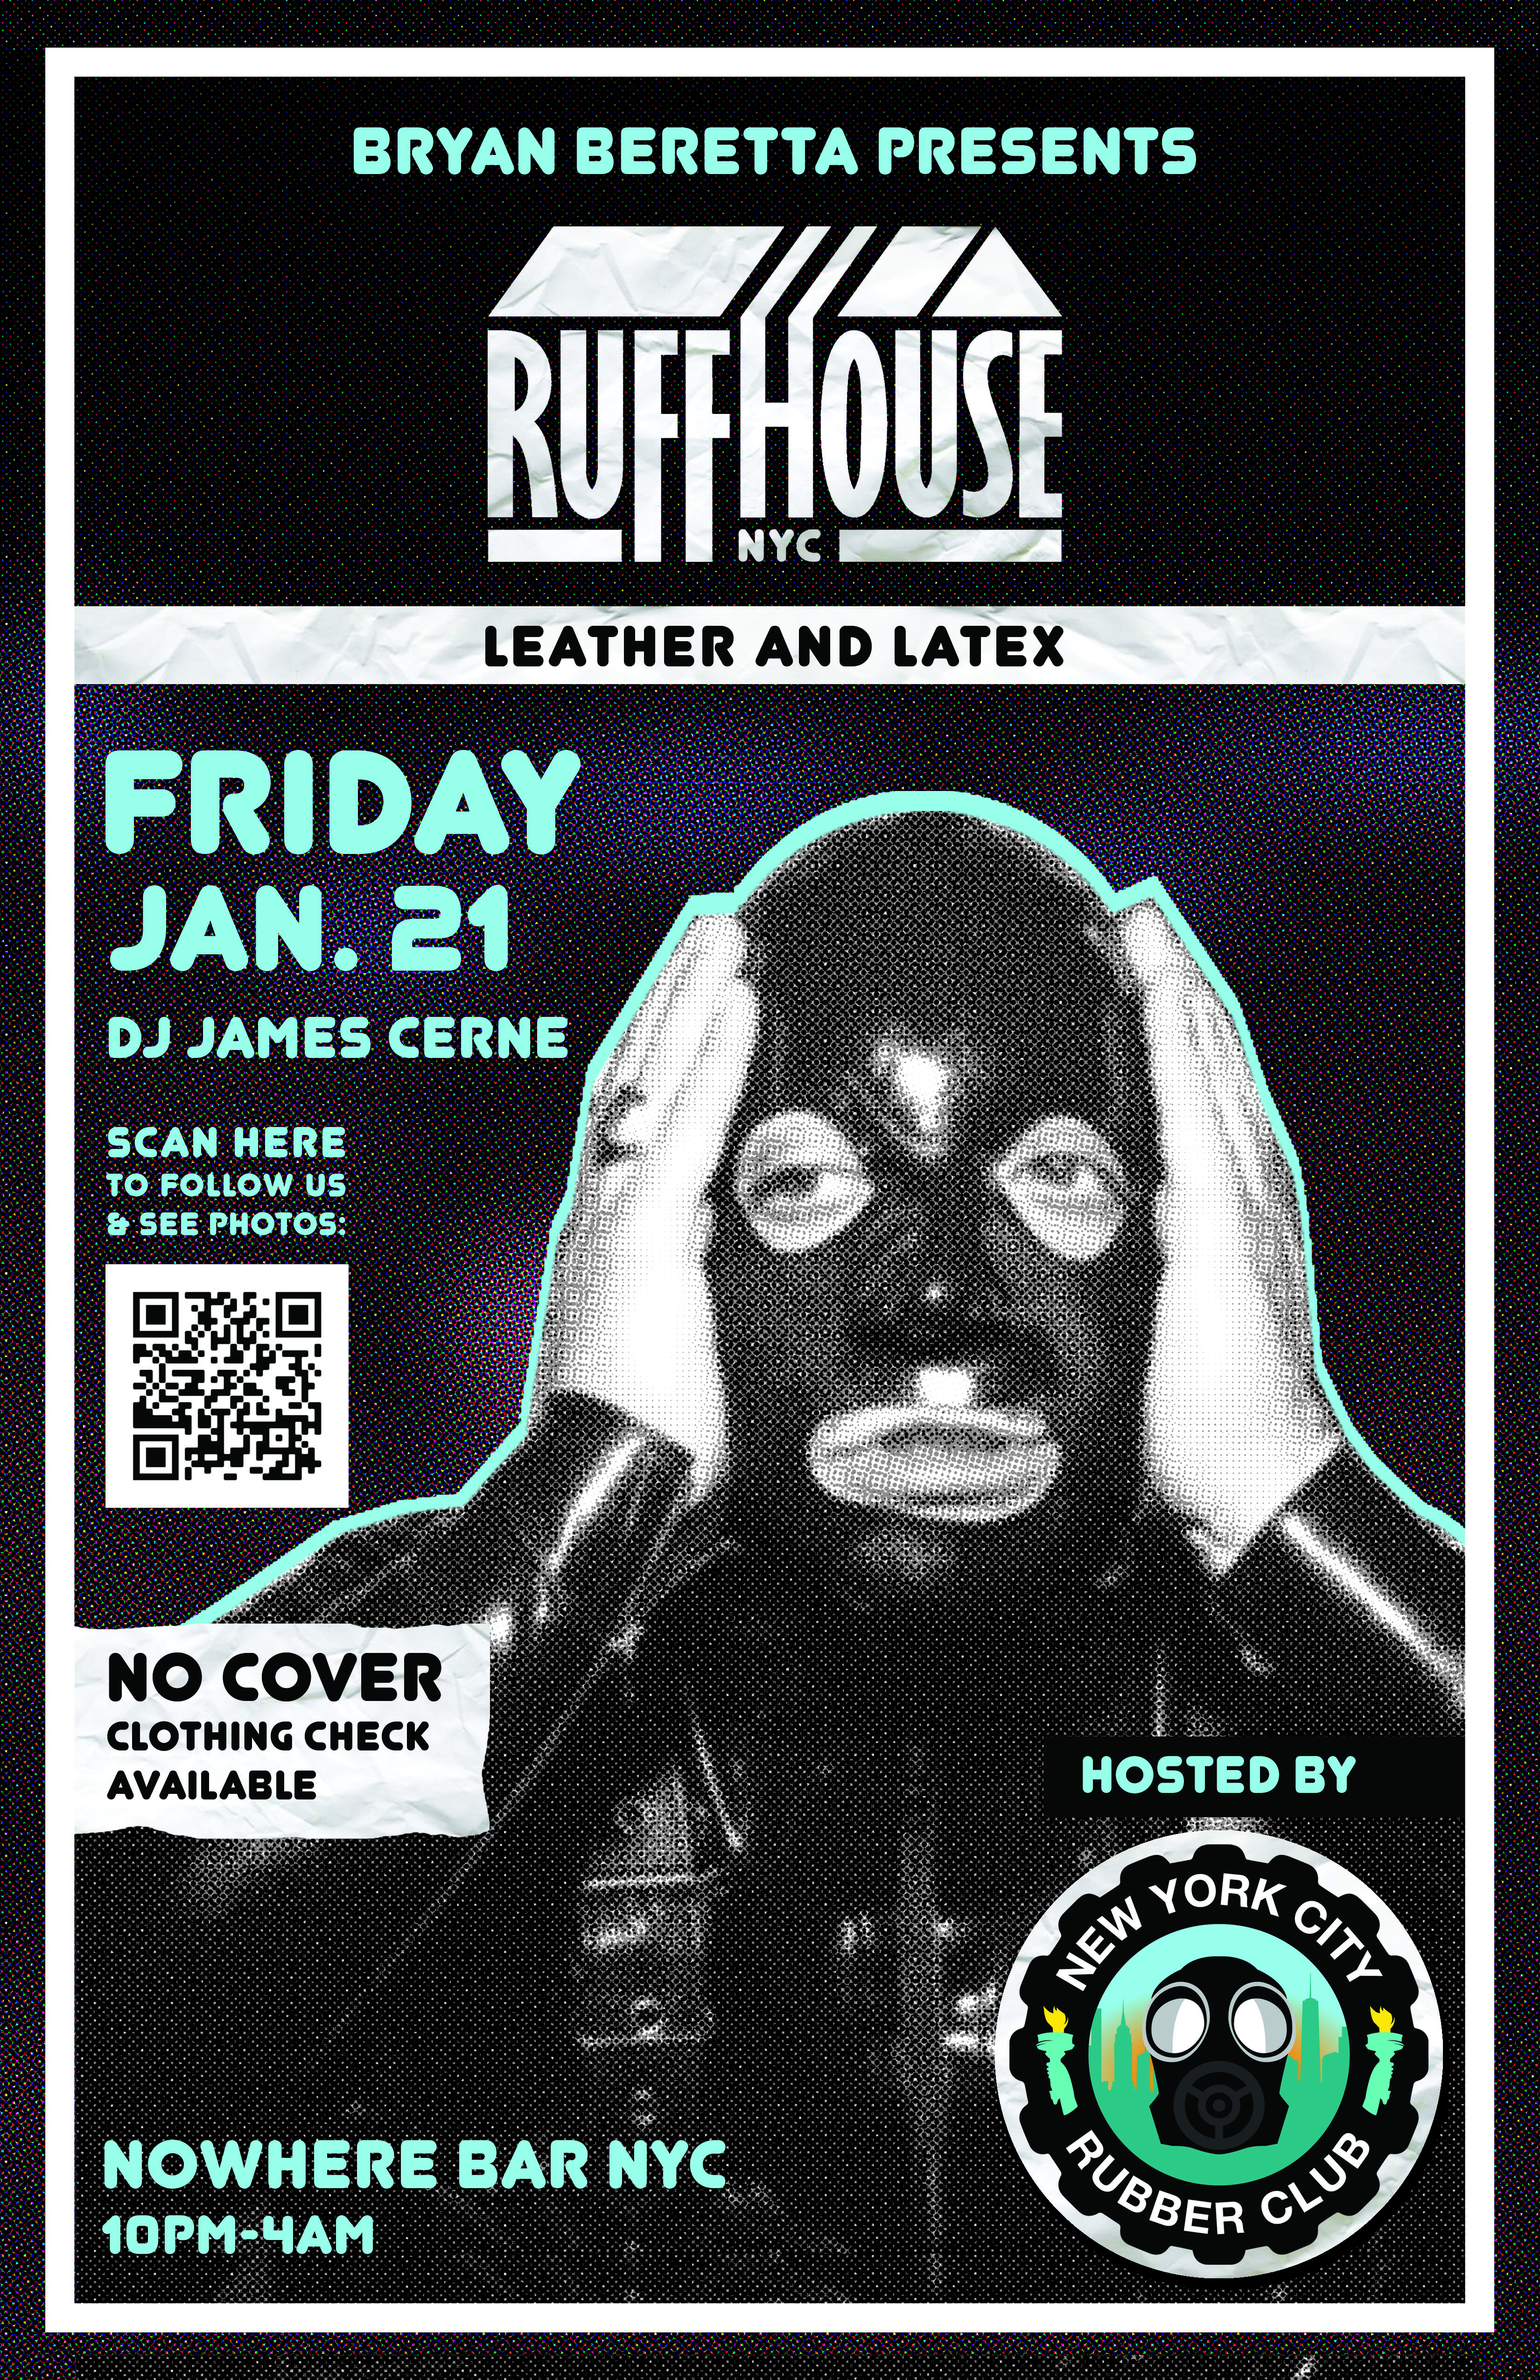 A NYC rubber social joining RuffHouse at NoWhere Bar 10pm-4am Fri 21st Jan